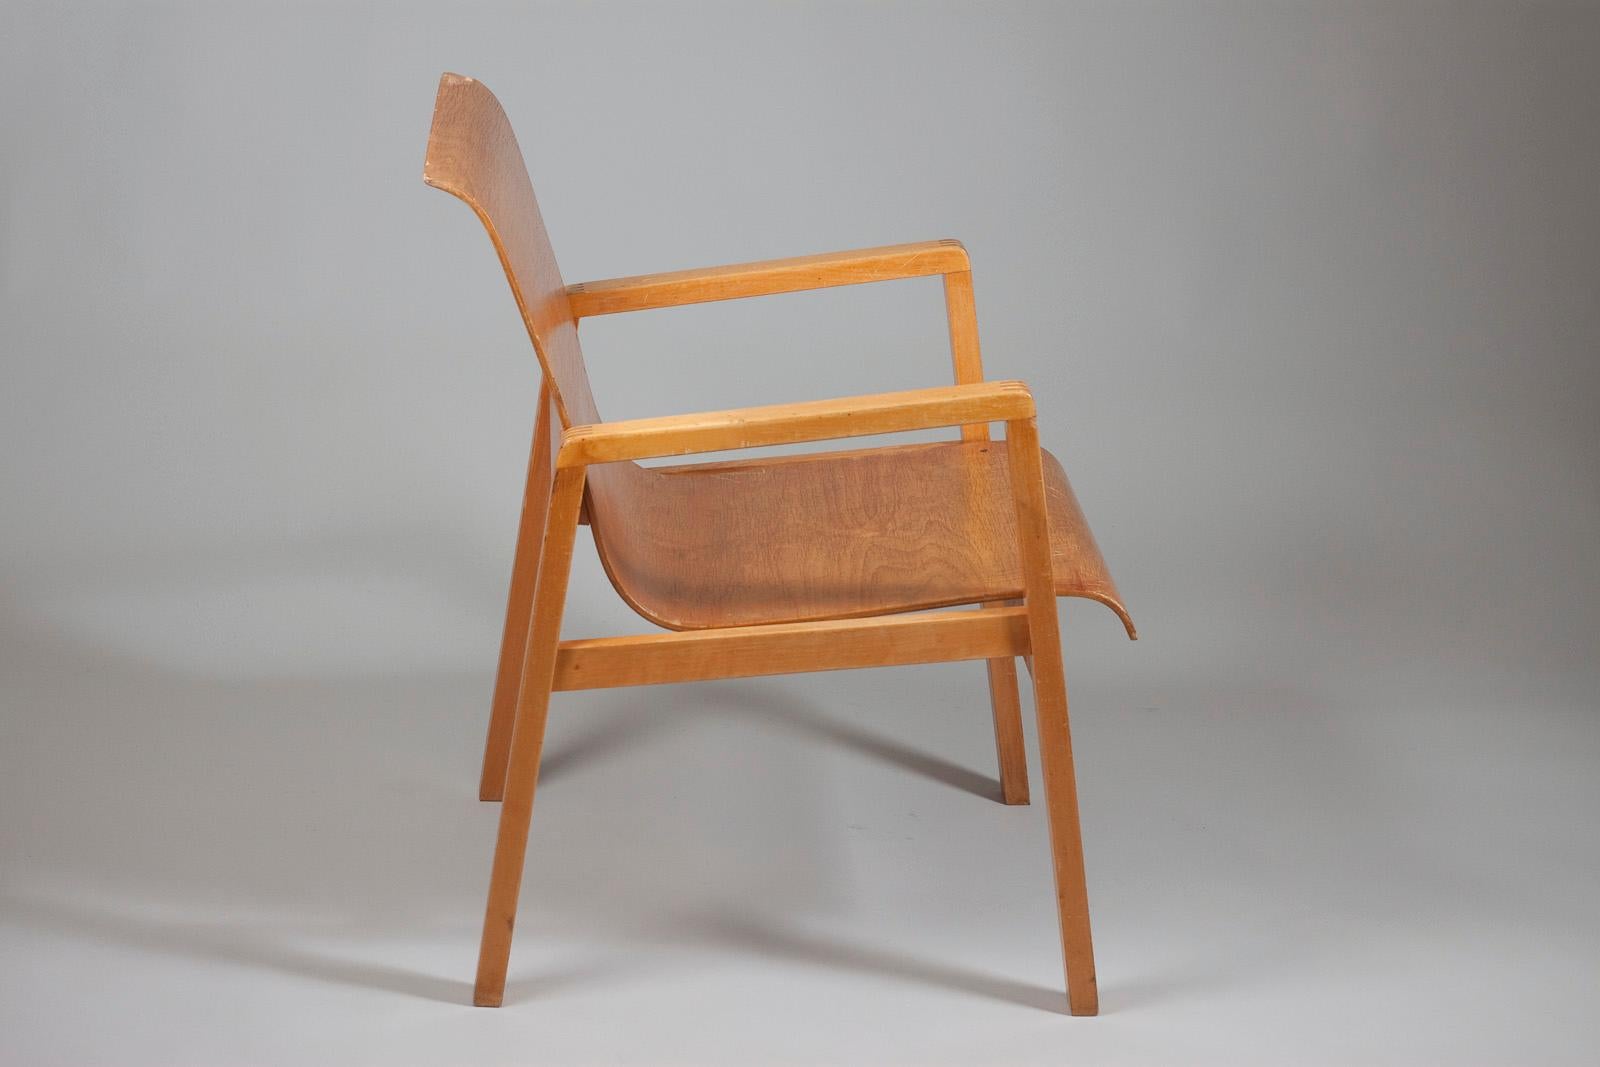 Scandinavian Modern Alvar Aalto Early Hallway Chair 51/403 for Paimio Sanatorium 1932, Finland For Sale